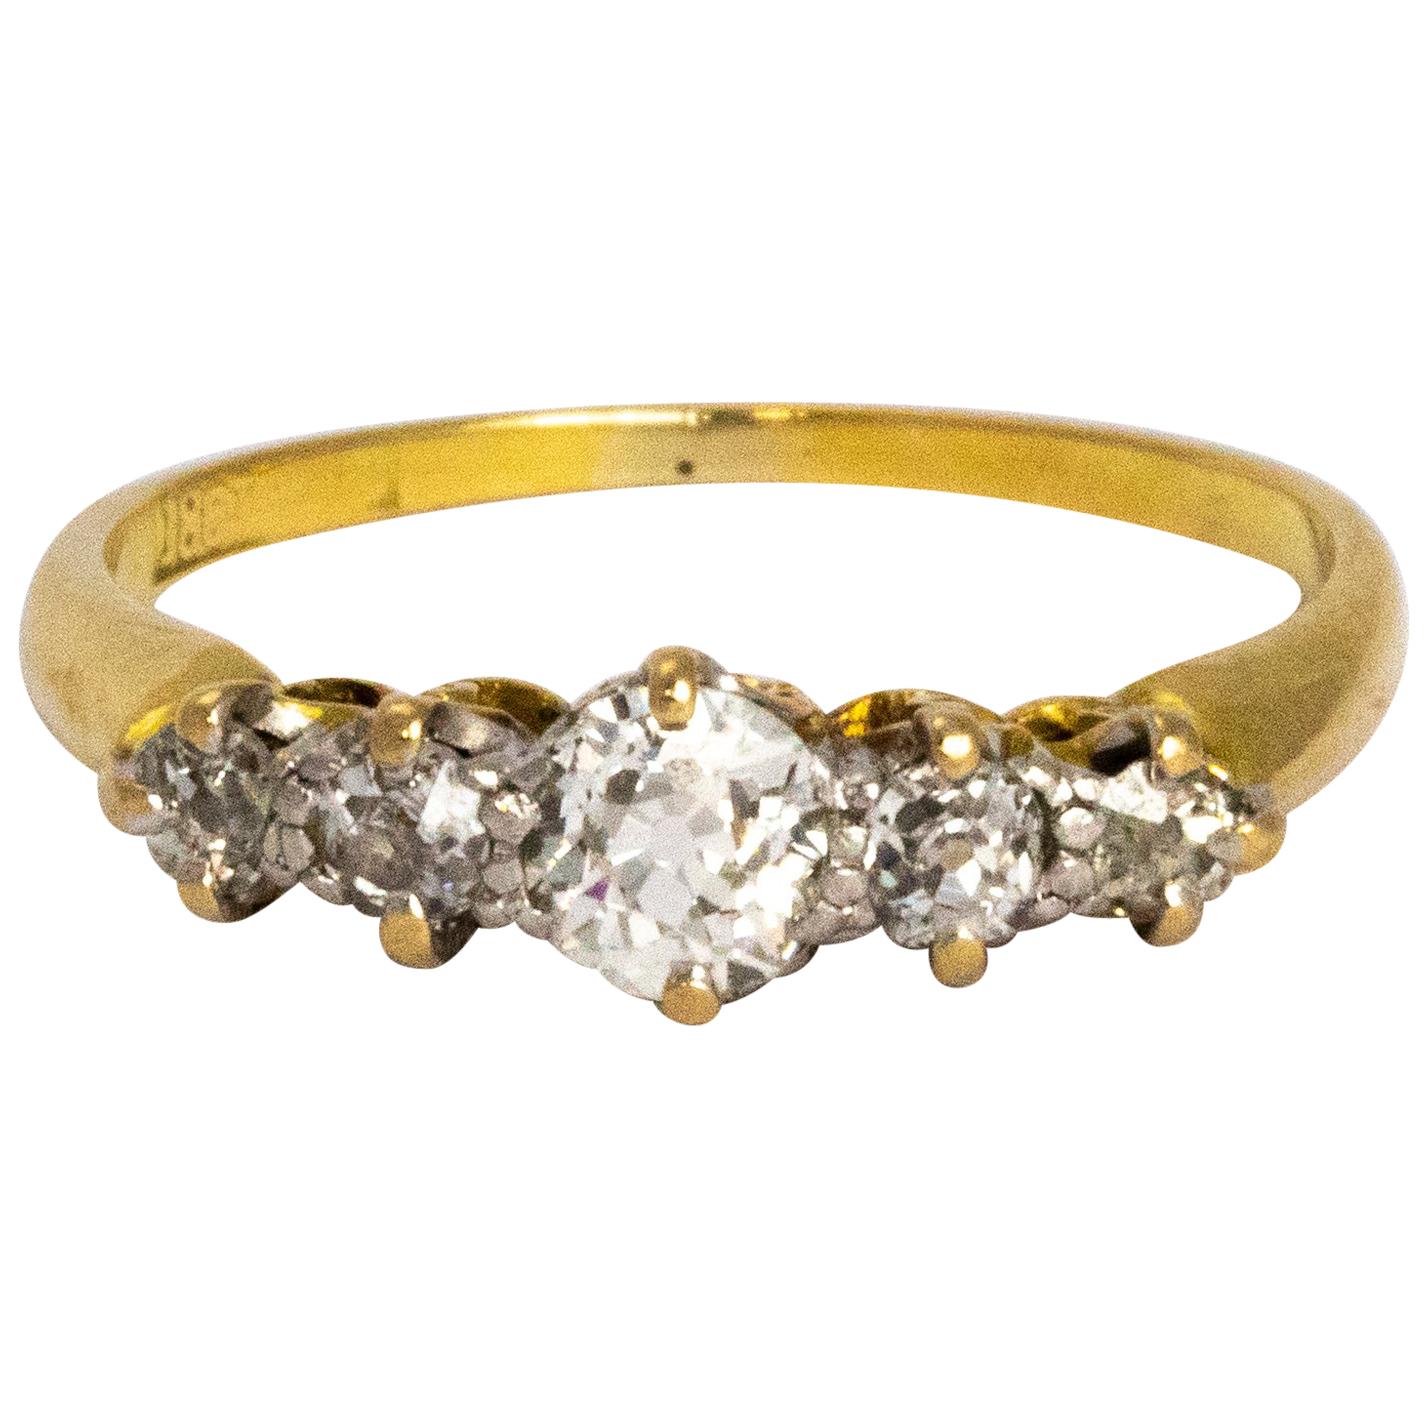 Edwardian Diamond Five-Stone 18 Carat Gold Ring